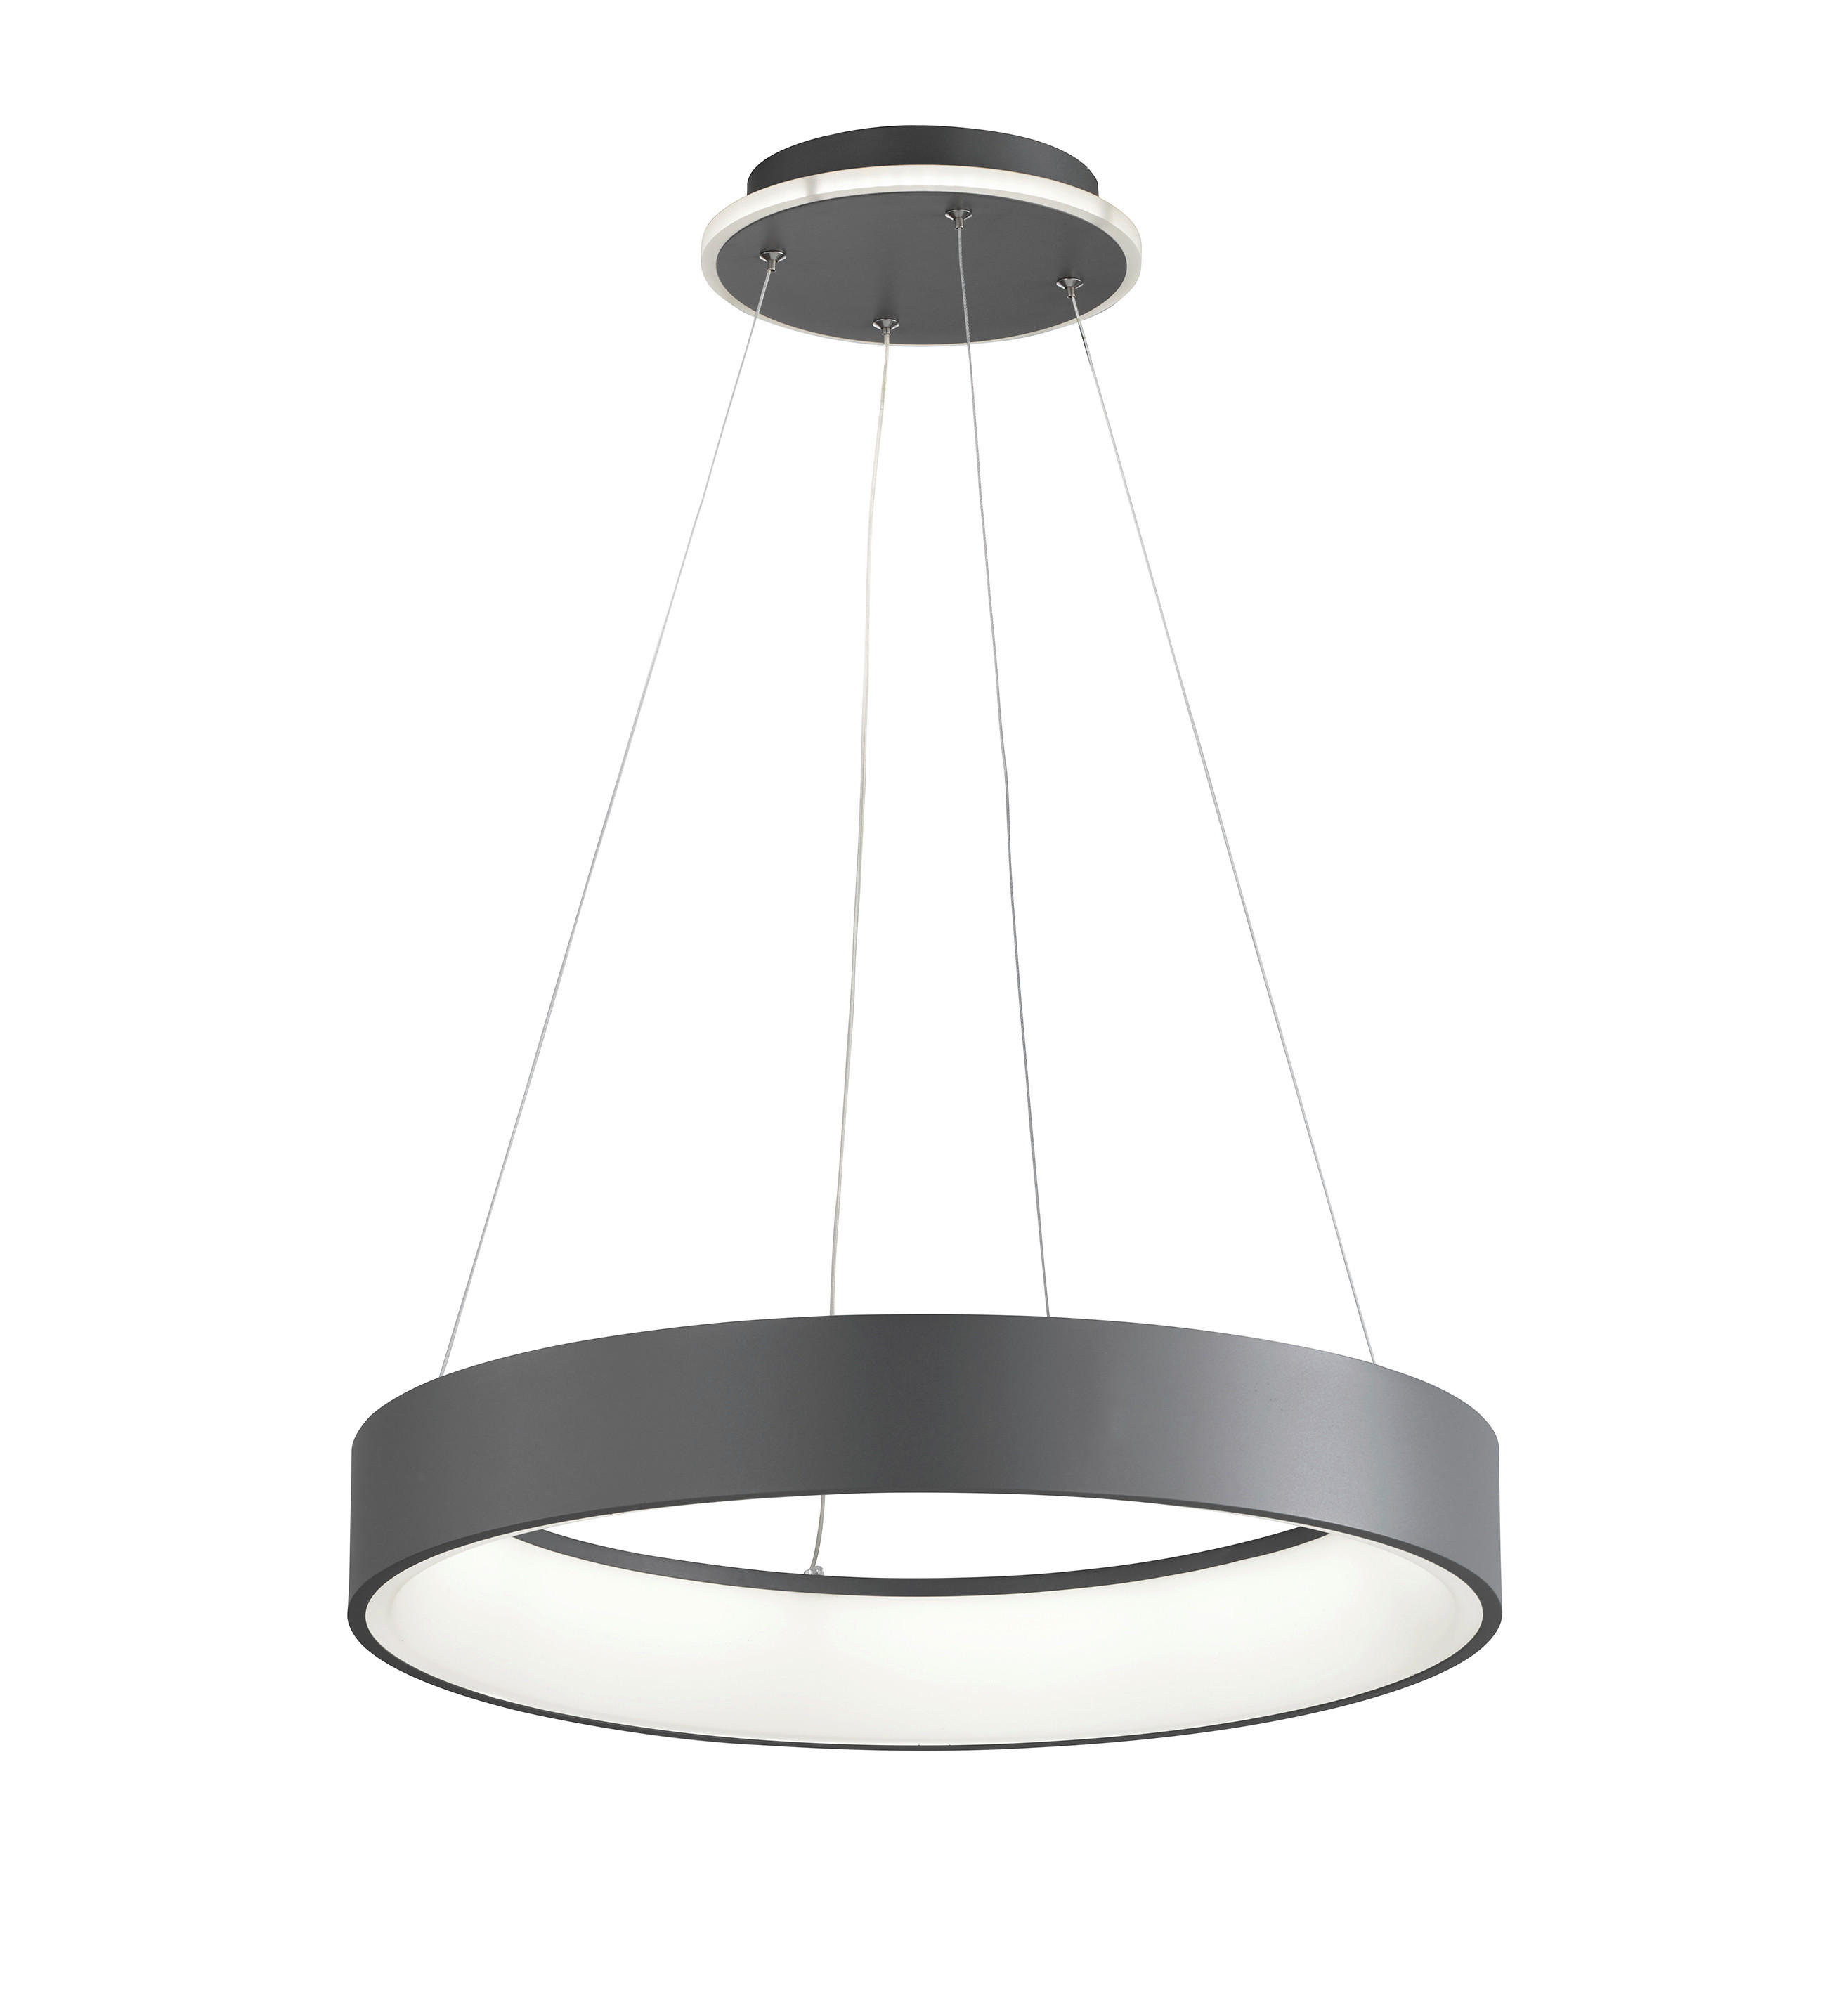 LED-HÄNGELEUCHTE  - Dunkelgrau, Design, Kunststoff/Metall (60/150cm) - Wofi